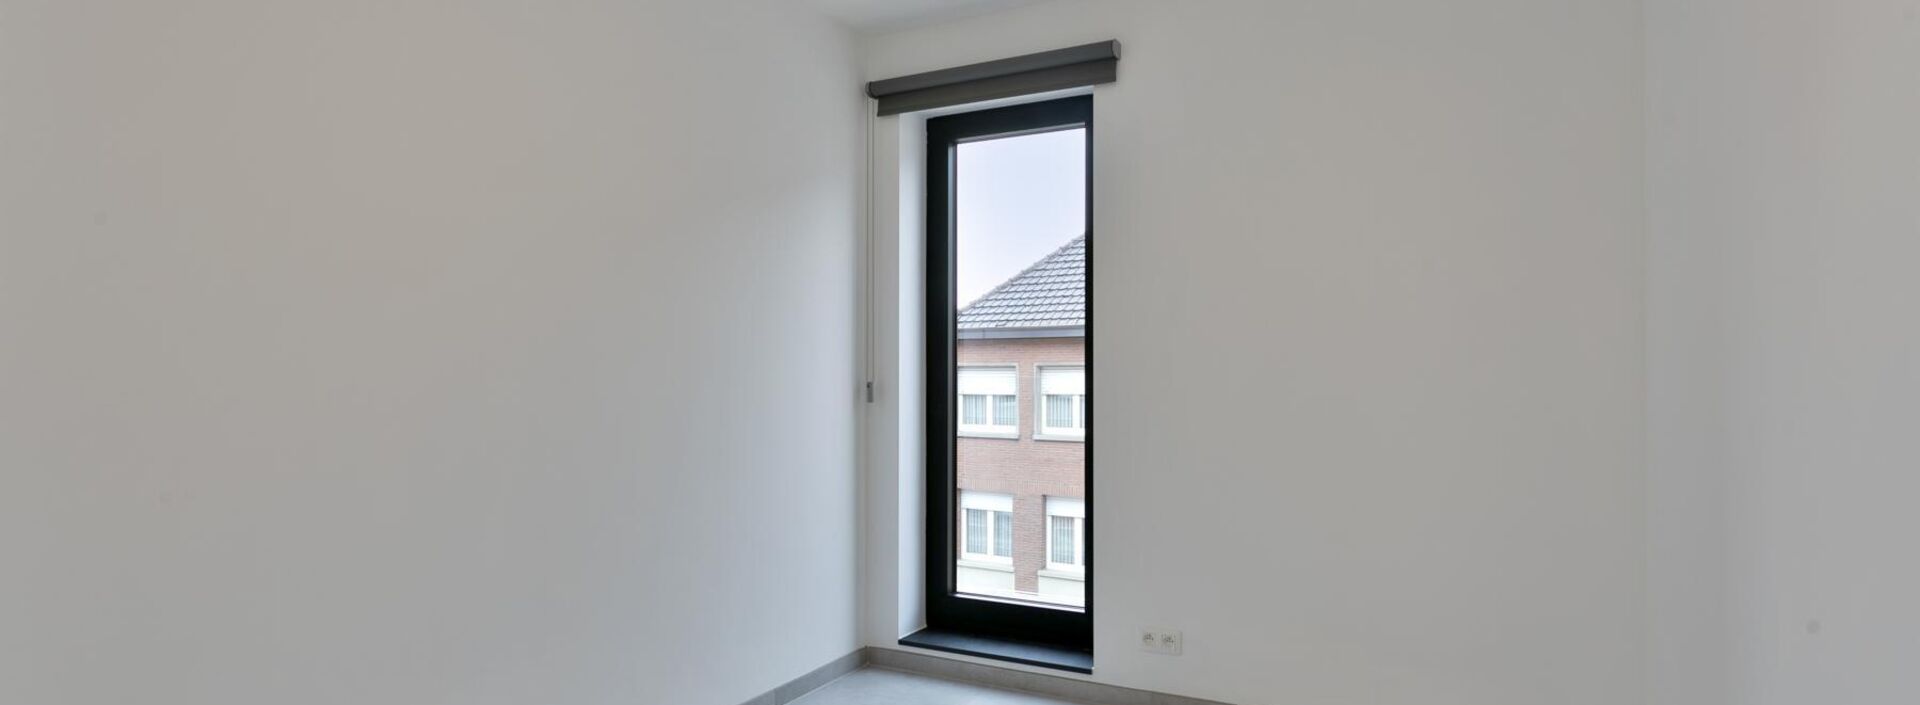 Appartement te huur in Hulshout